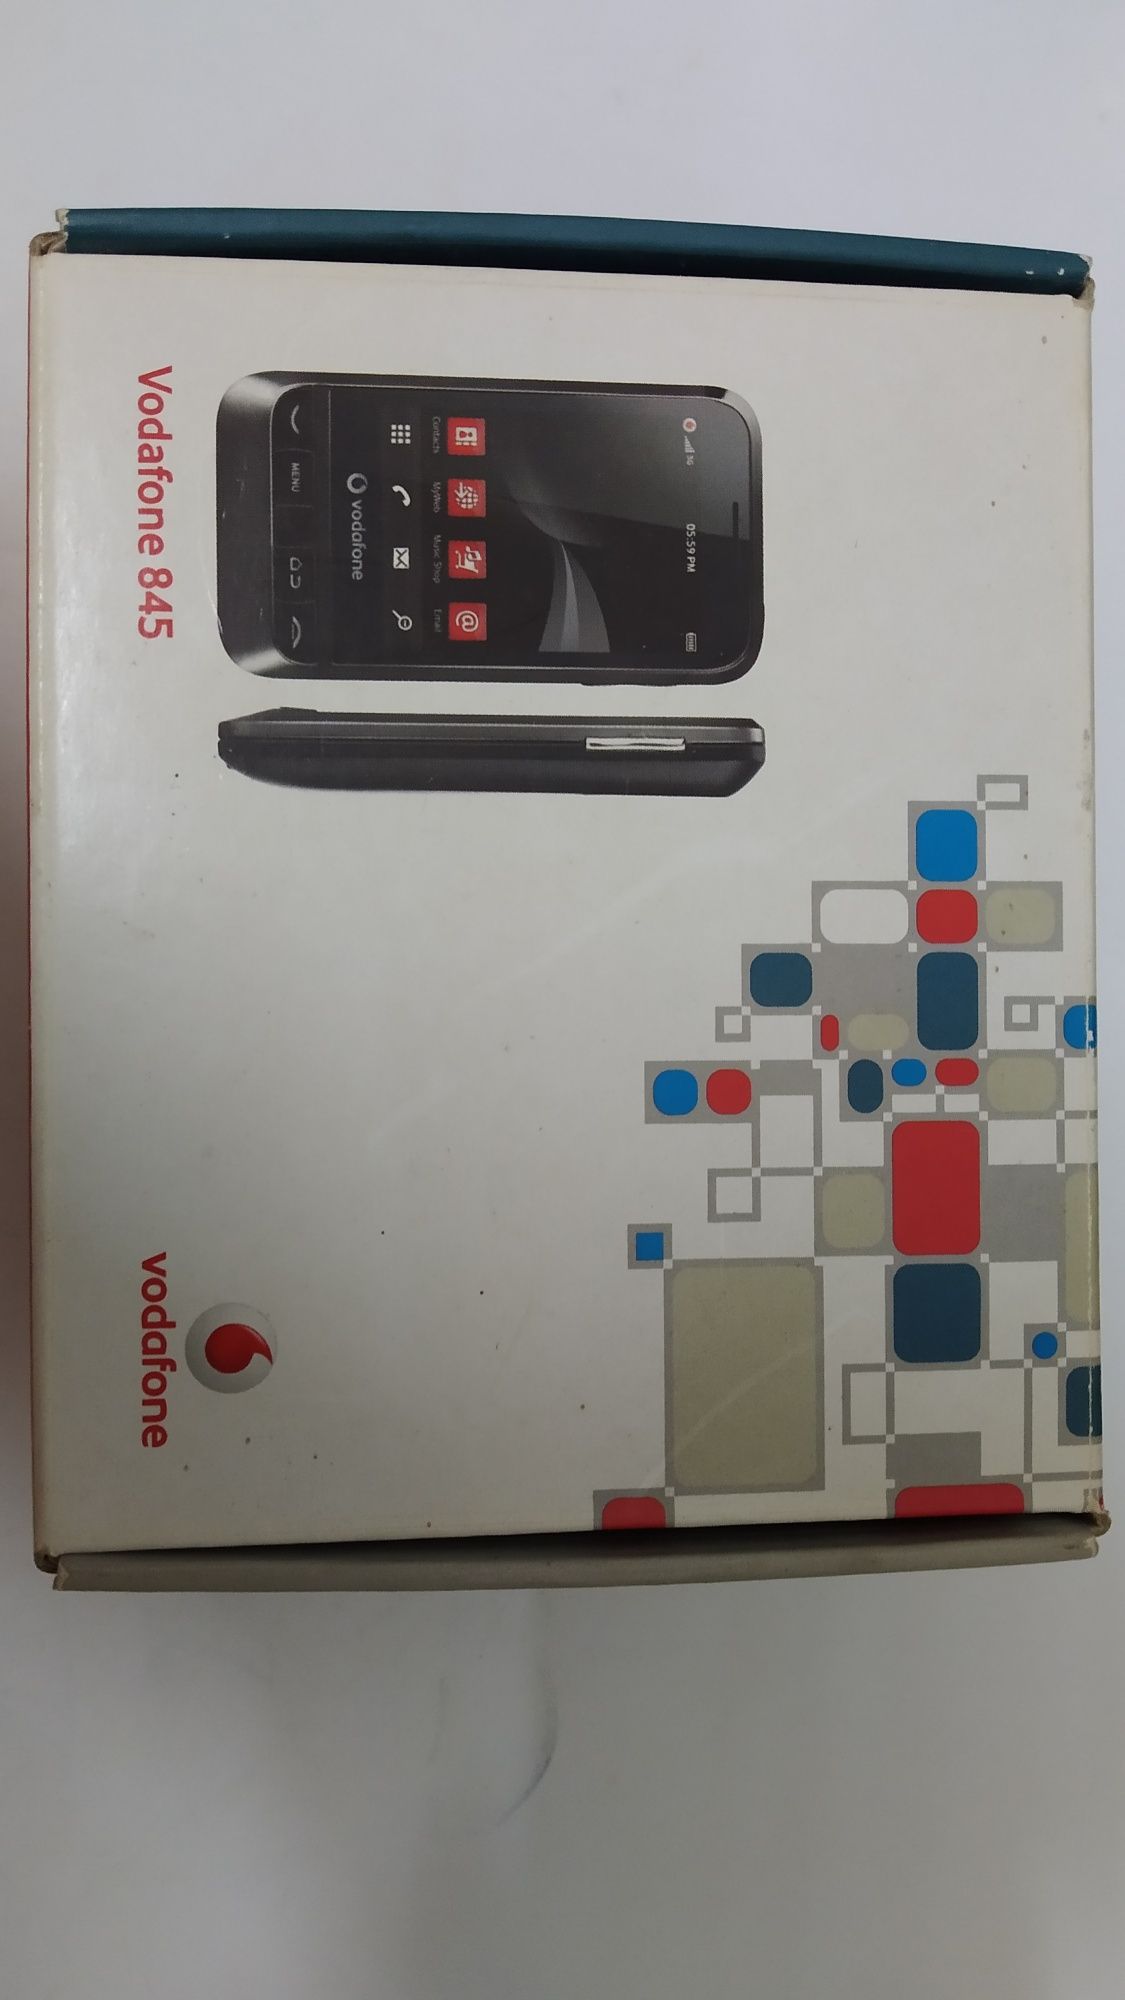 Telemóvel Vodafone 845 (peças)